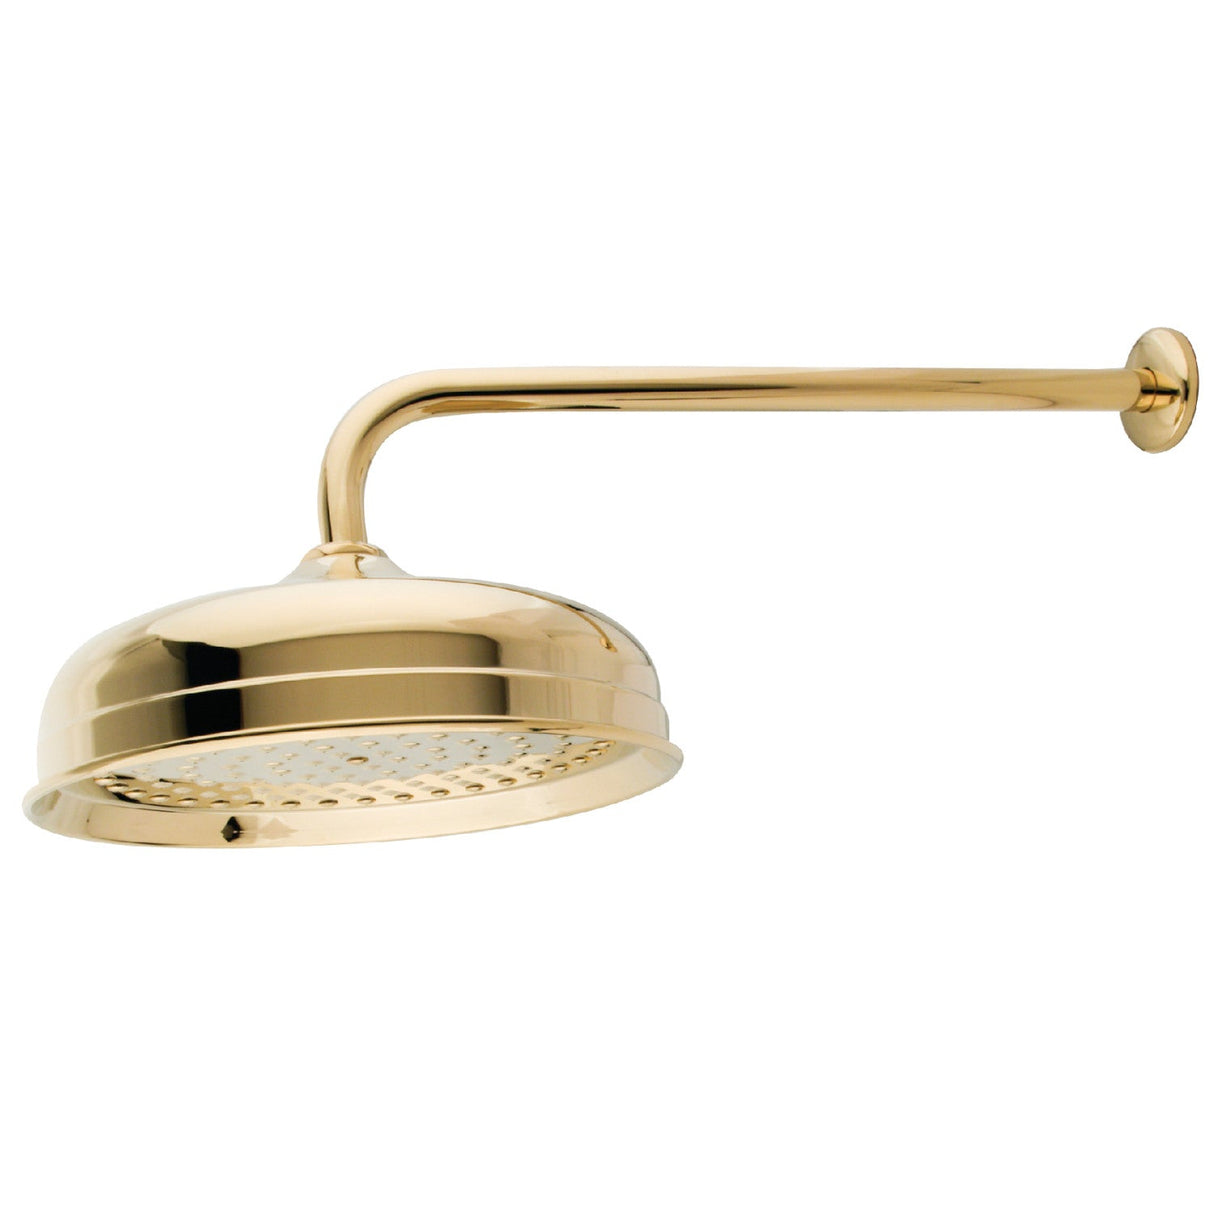 Shower Scape K225K12 10-Inch Brass Shower Head with 17-Inch Shower Arm, Polished Brass